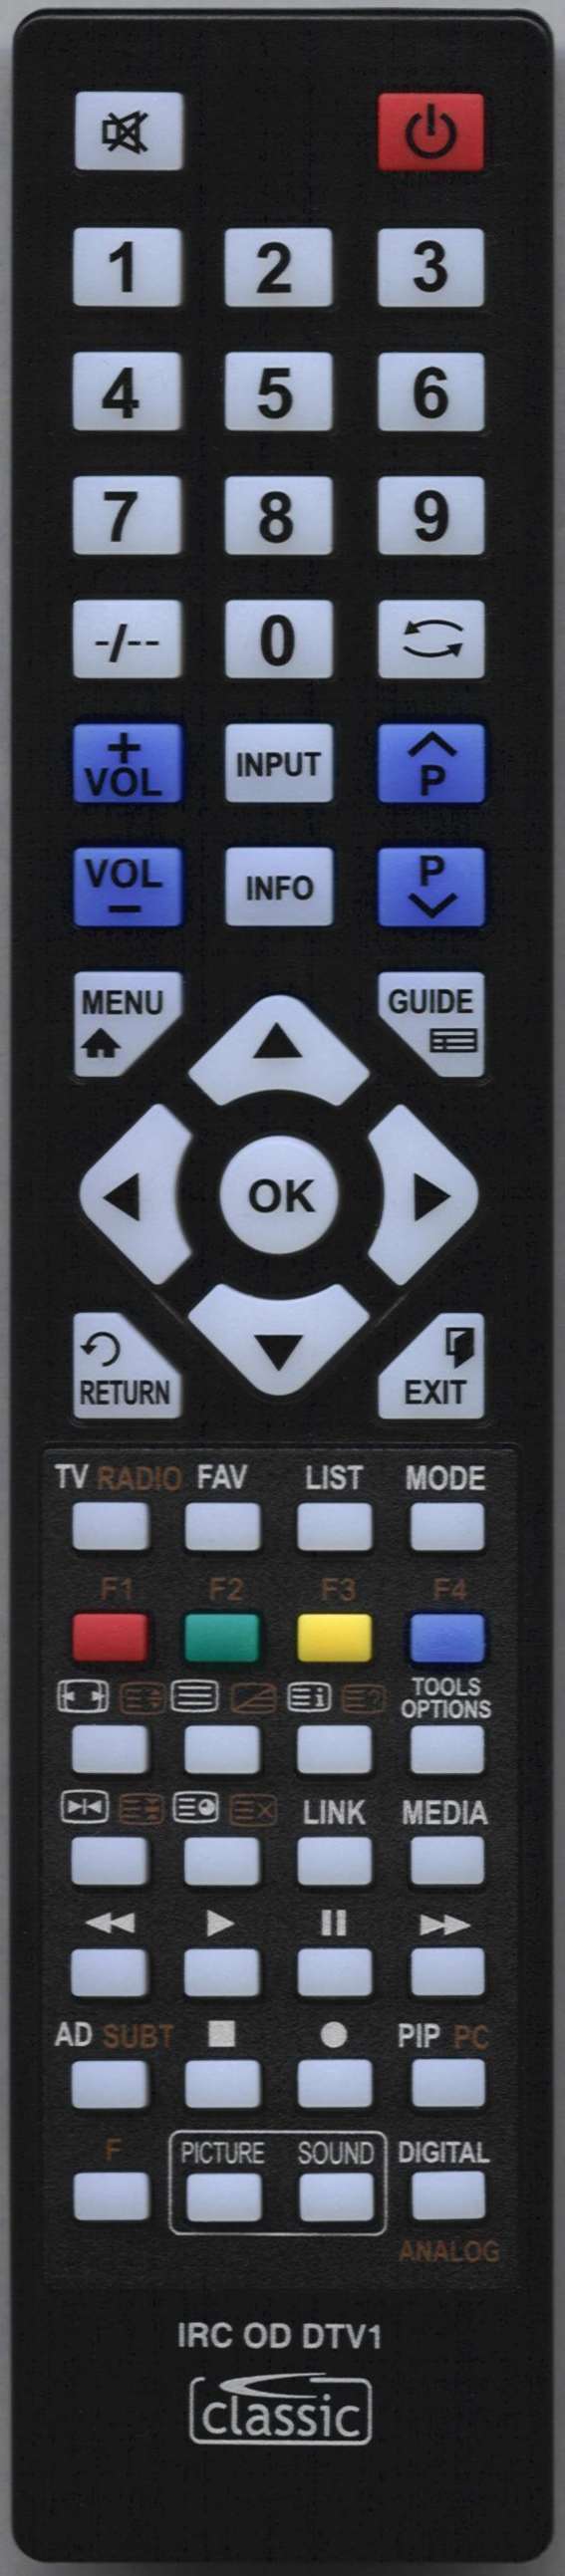 LG 43UK6950 Remote Control Alternative